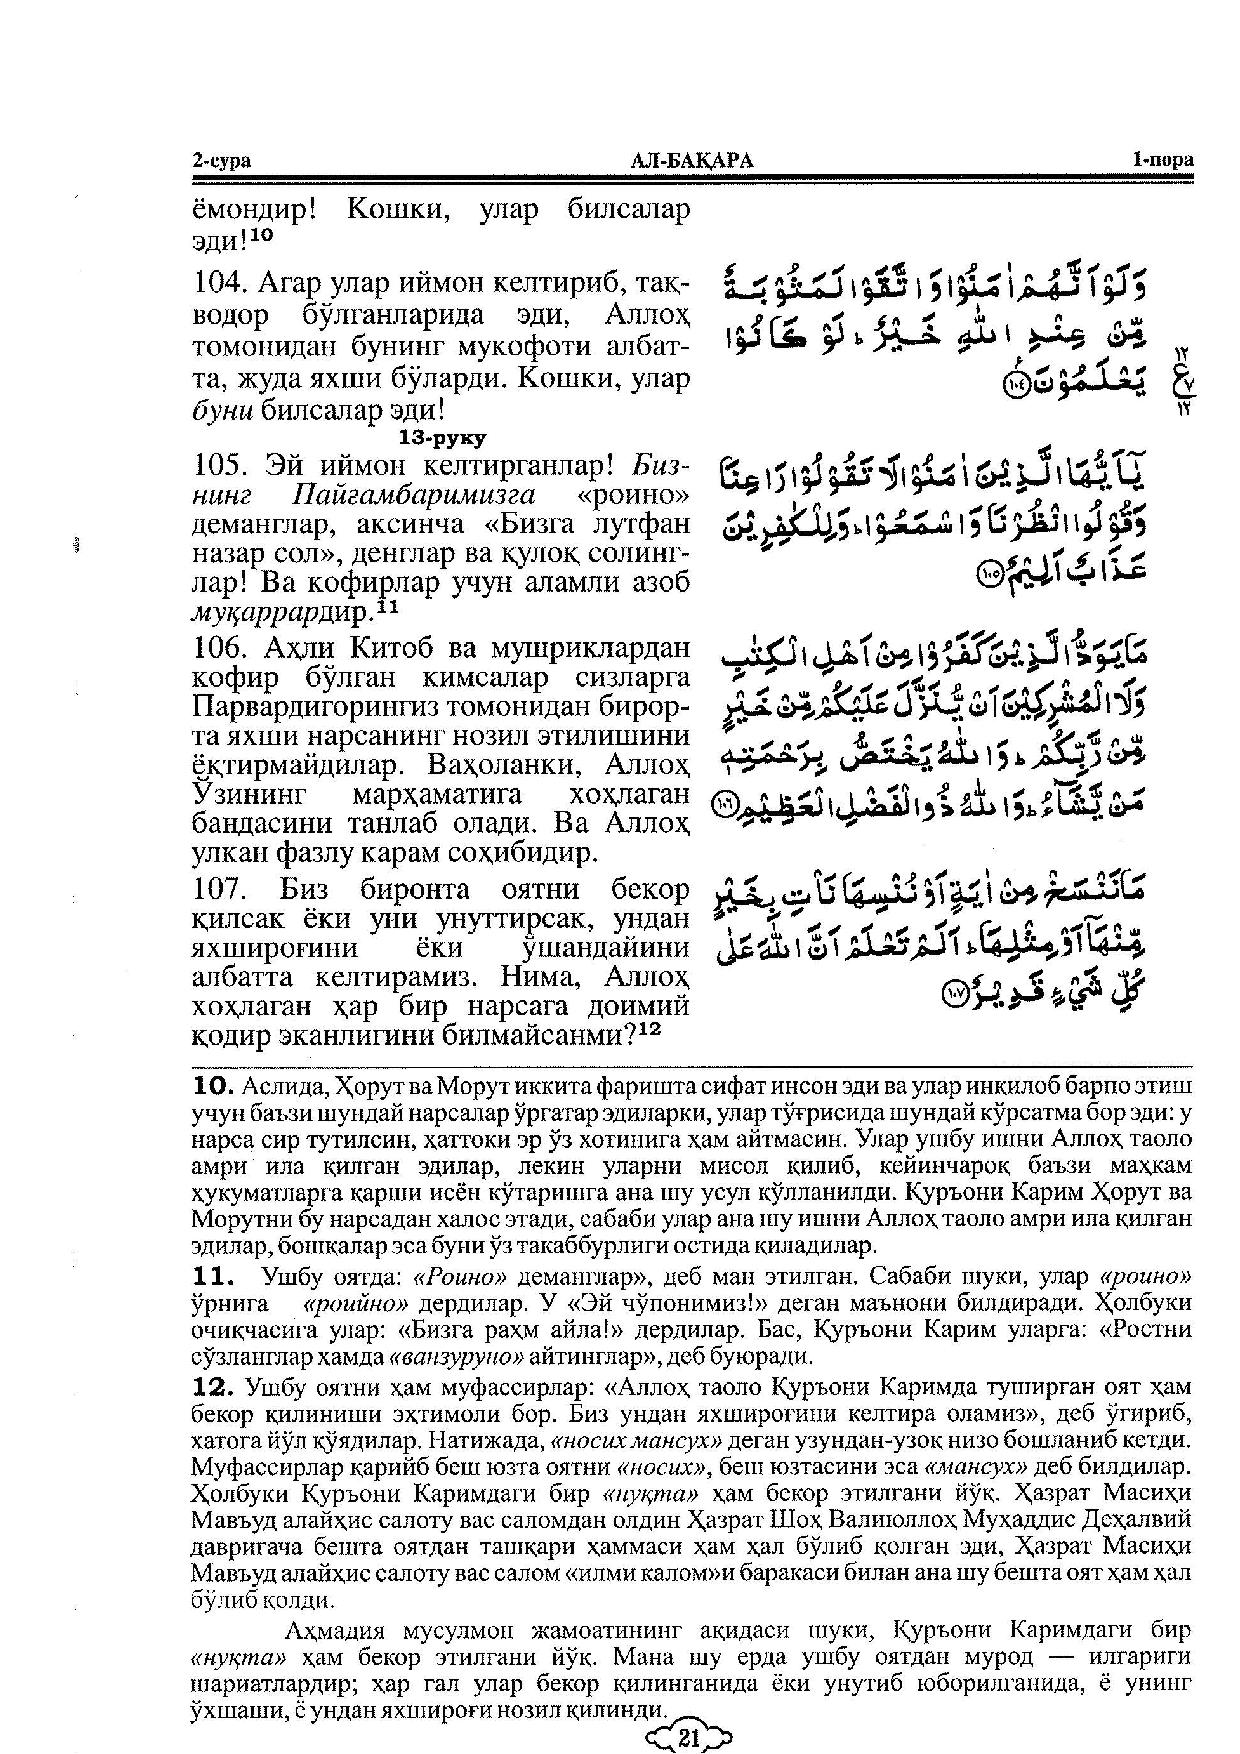 002-al-baqarah-page-019